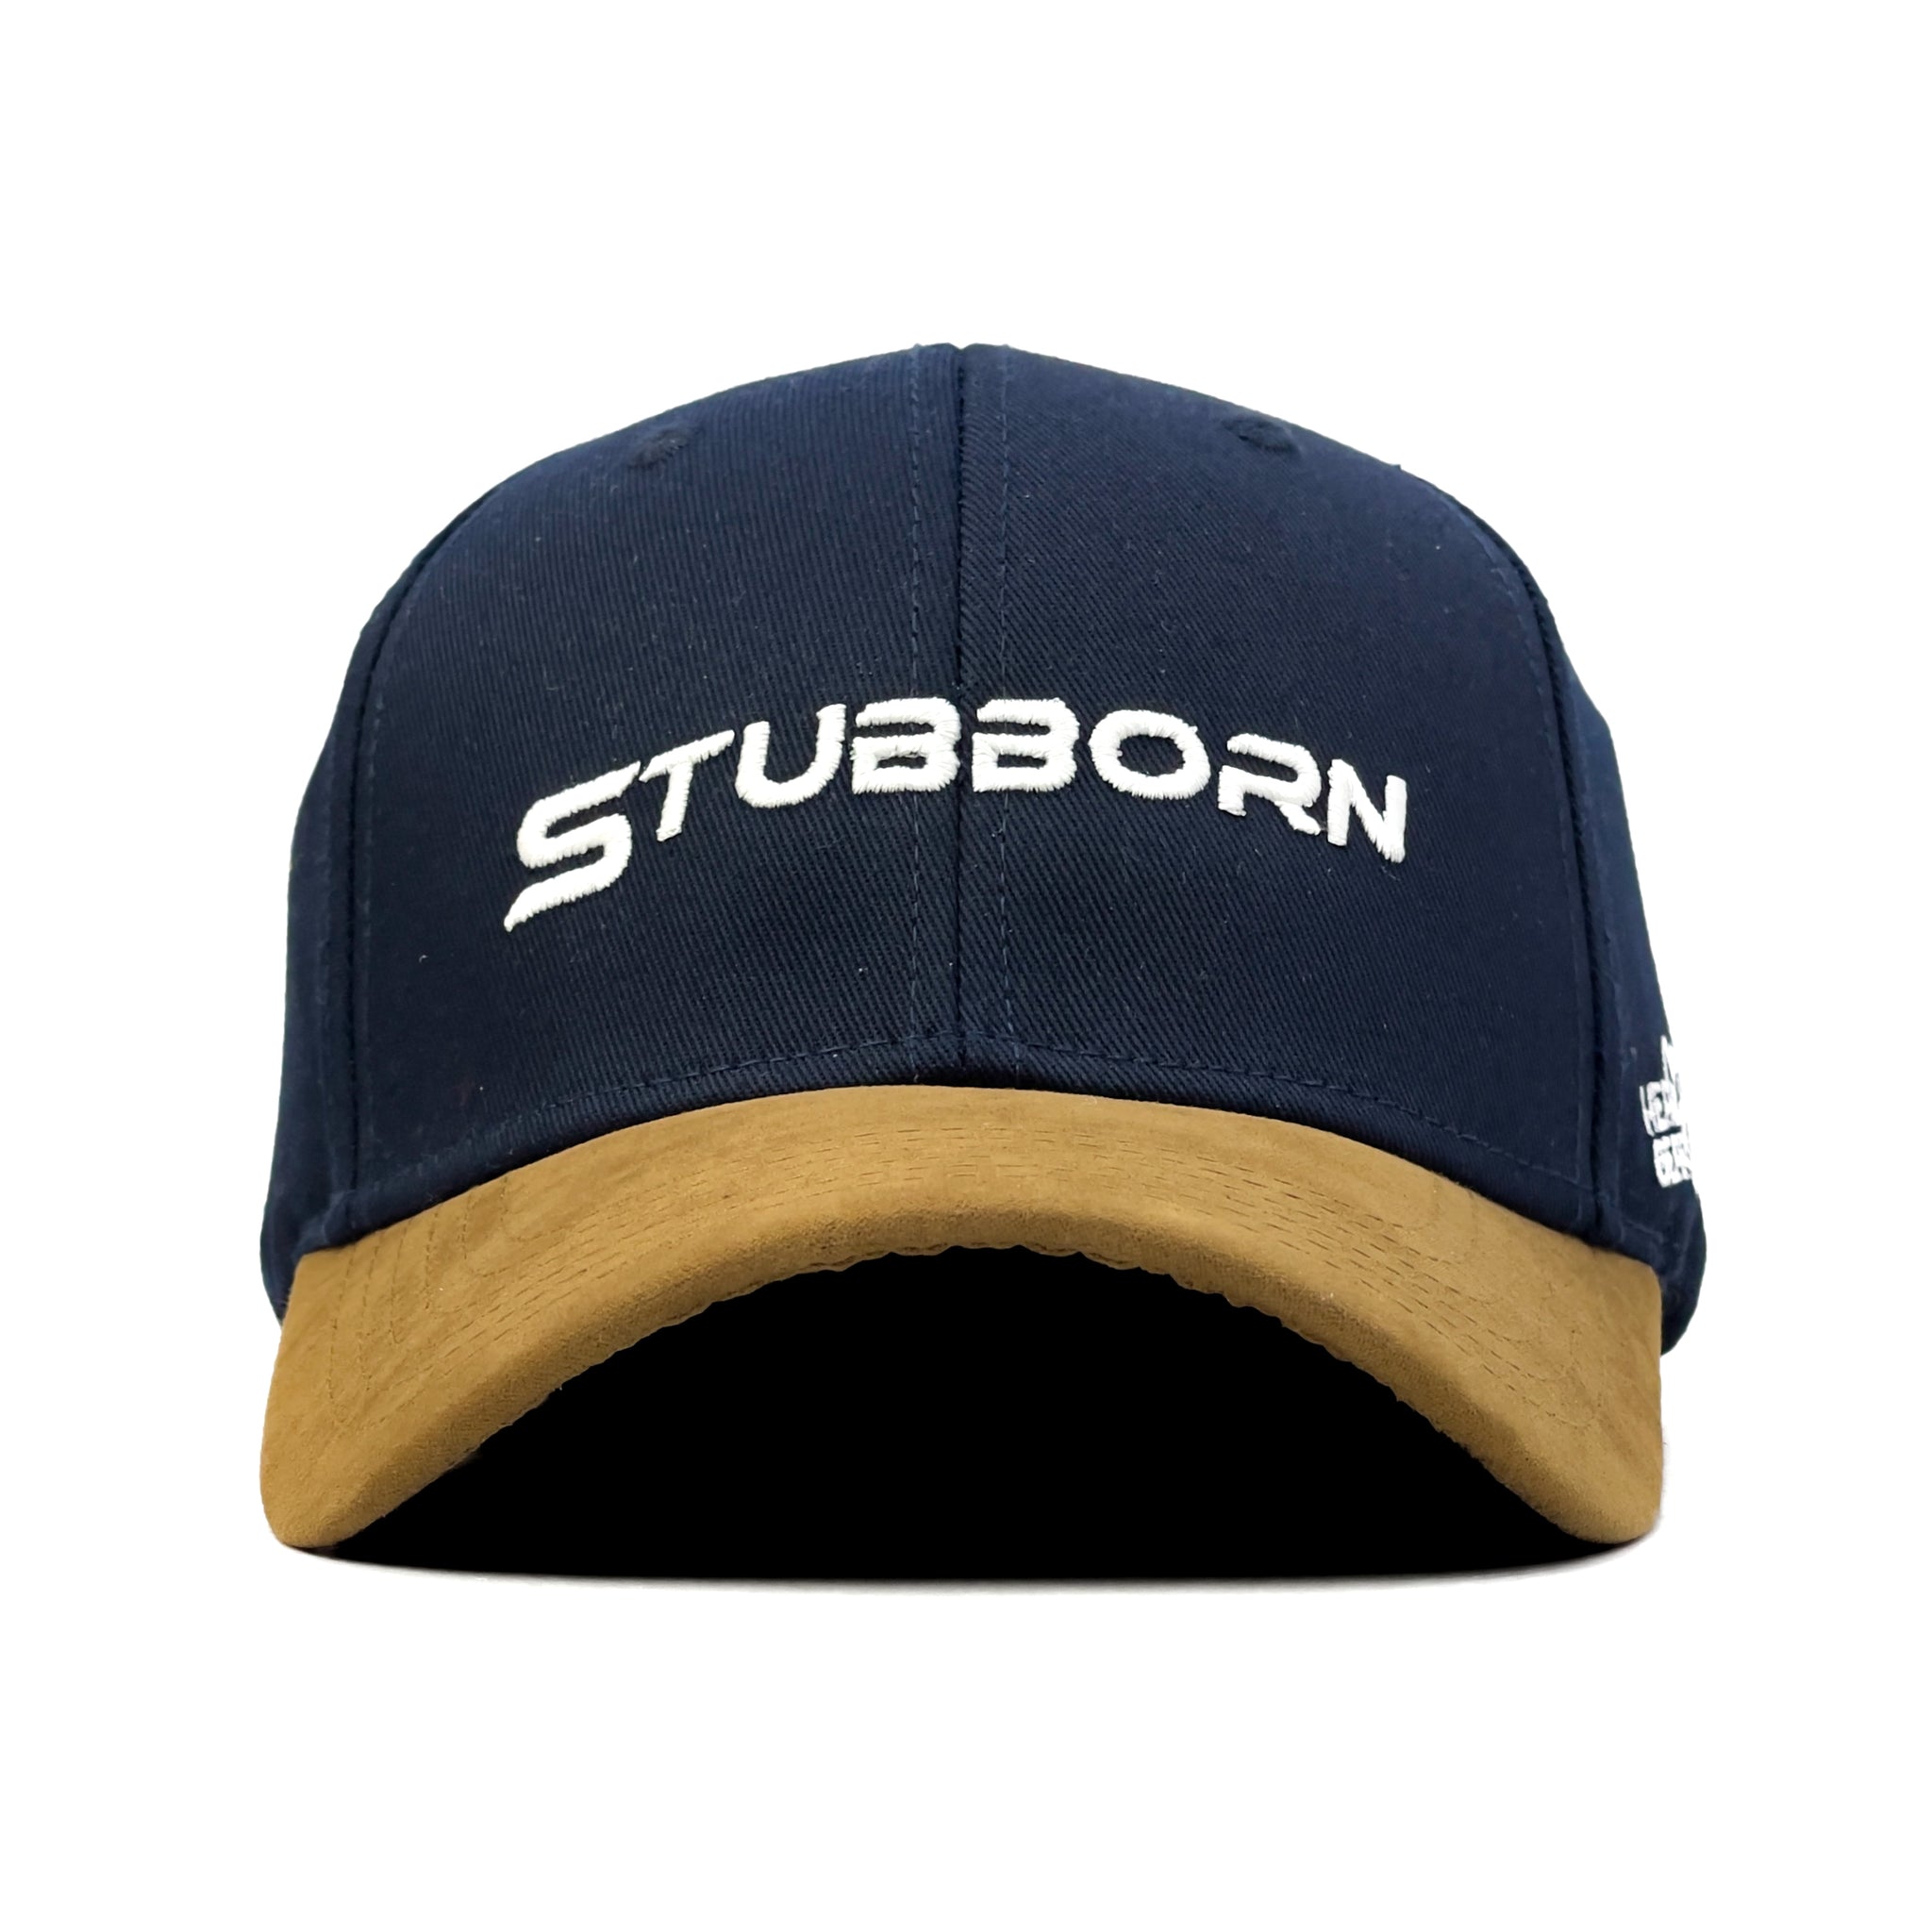 STUBBORN CURVED VISOR HEAD GEAR CAP